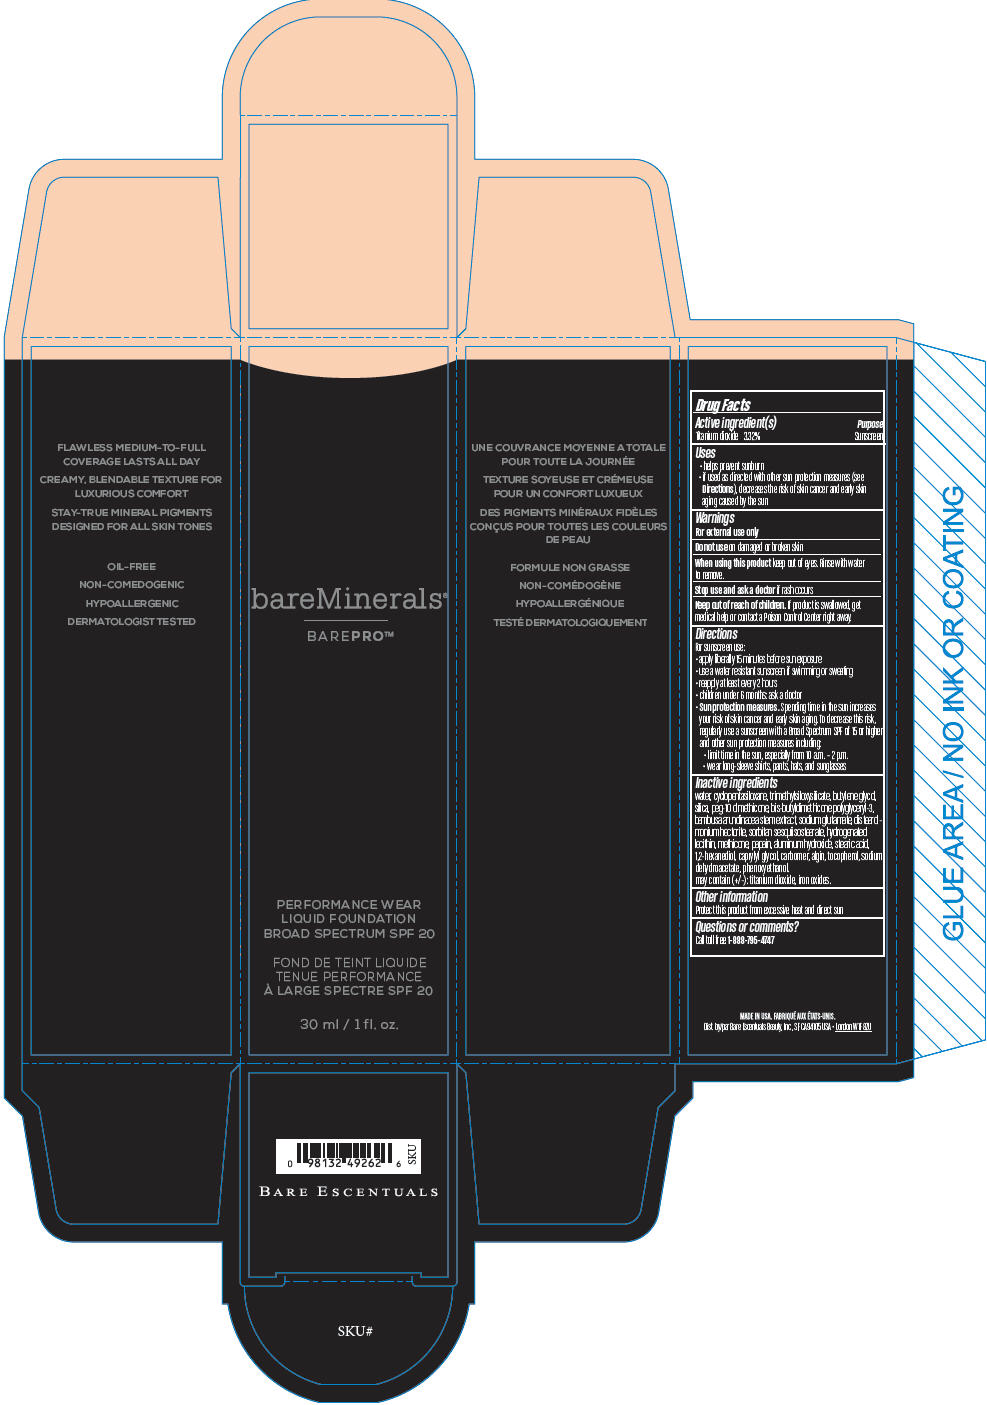 PRINCIPAL DISPLAY PANEL - 30 ml Bottle Carton - Aspen 04